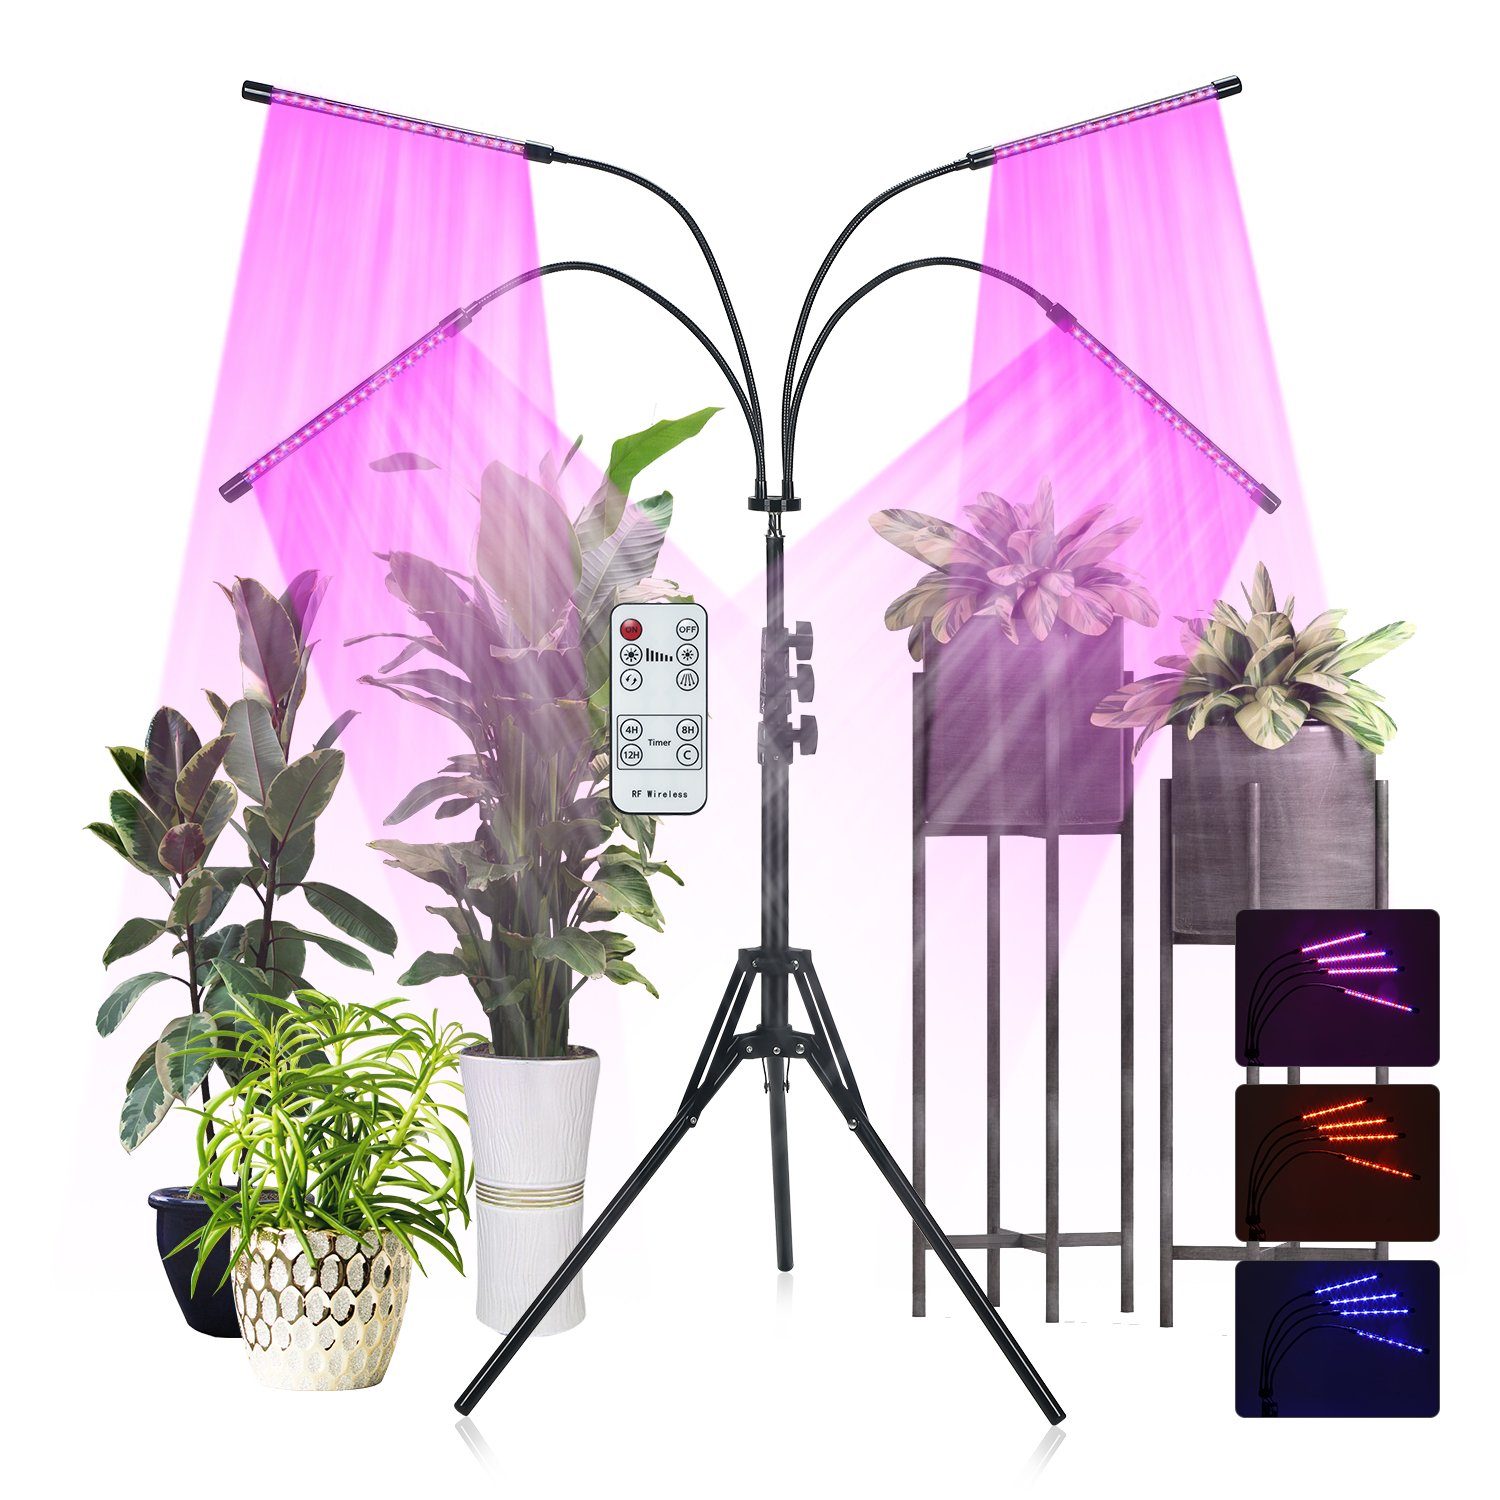 Clanmacy Pflanzenlampe Pflanzenleuchte Pflanzenlicht Grow Lampe  Wachstumlampe Pflanzenbeleuchtung Blumenlampe 15W 3 Modi 80 LEDs